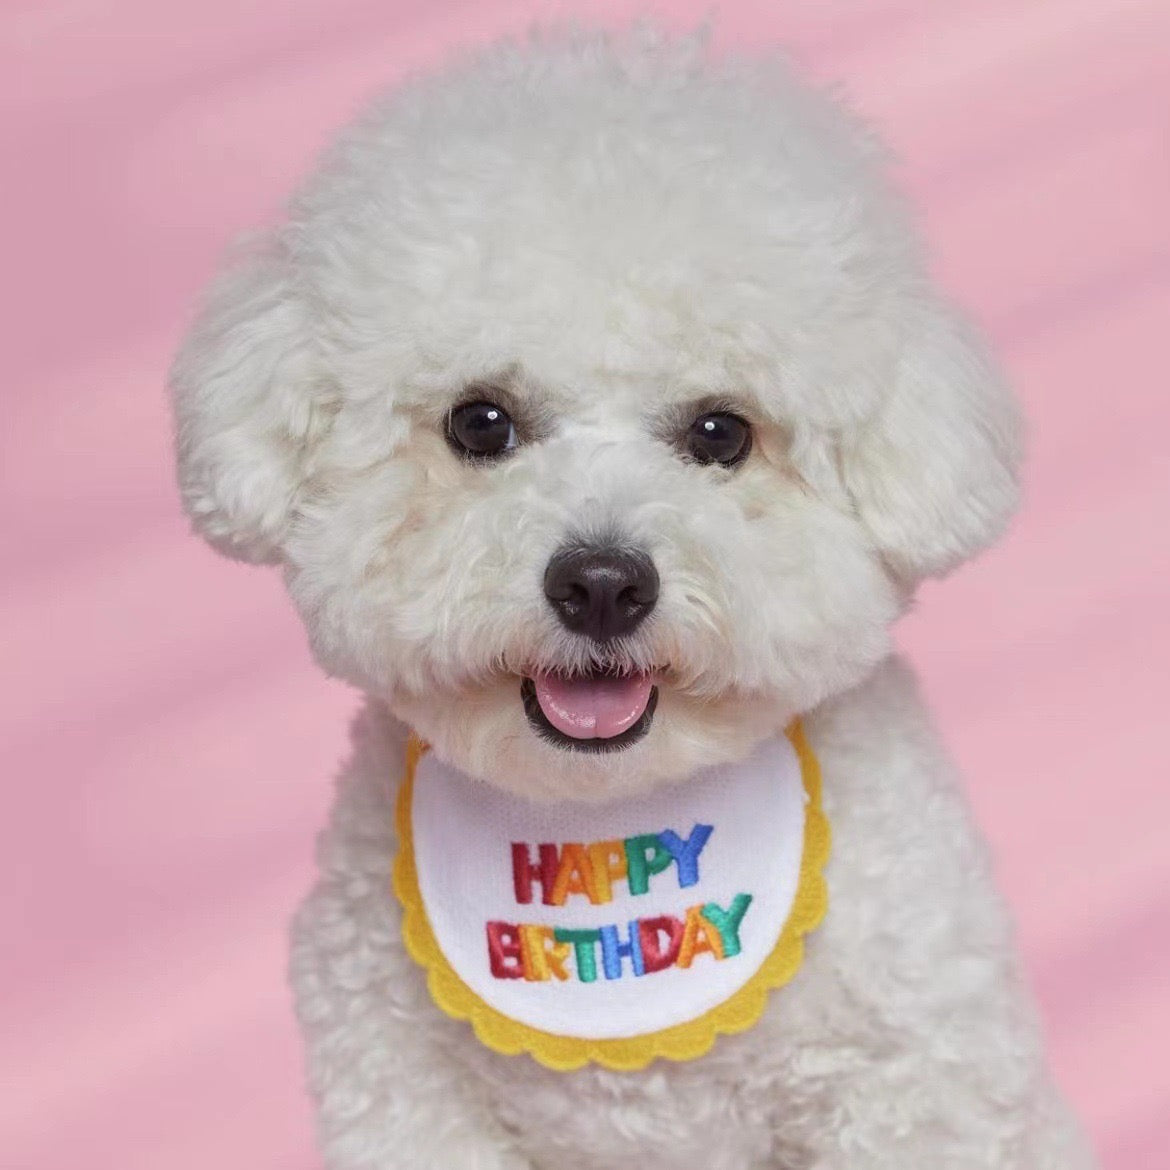 Happy Birthday Pet Apron Bib